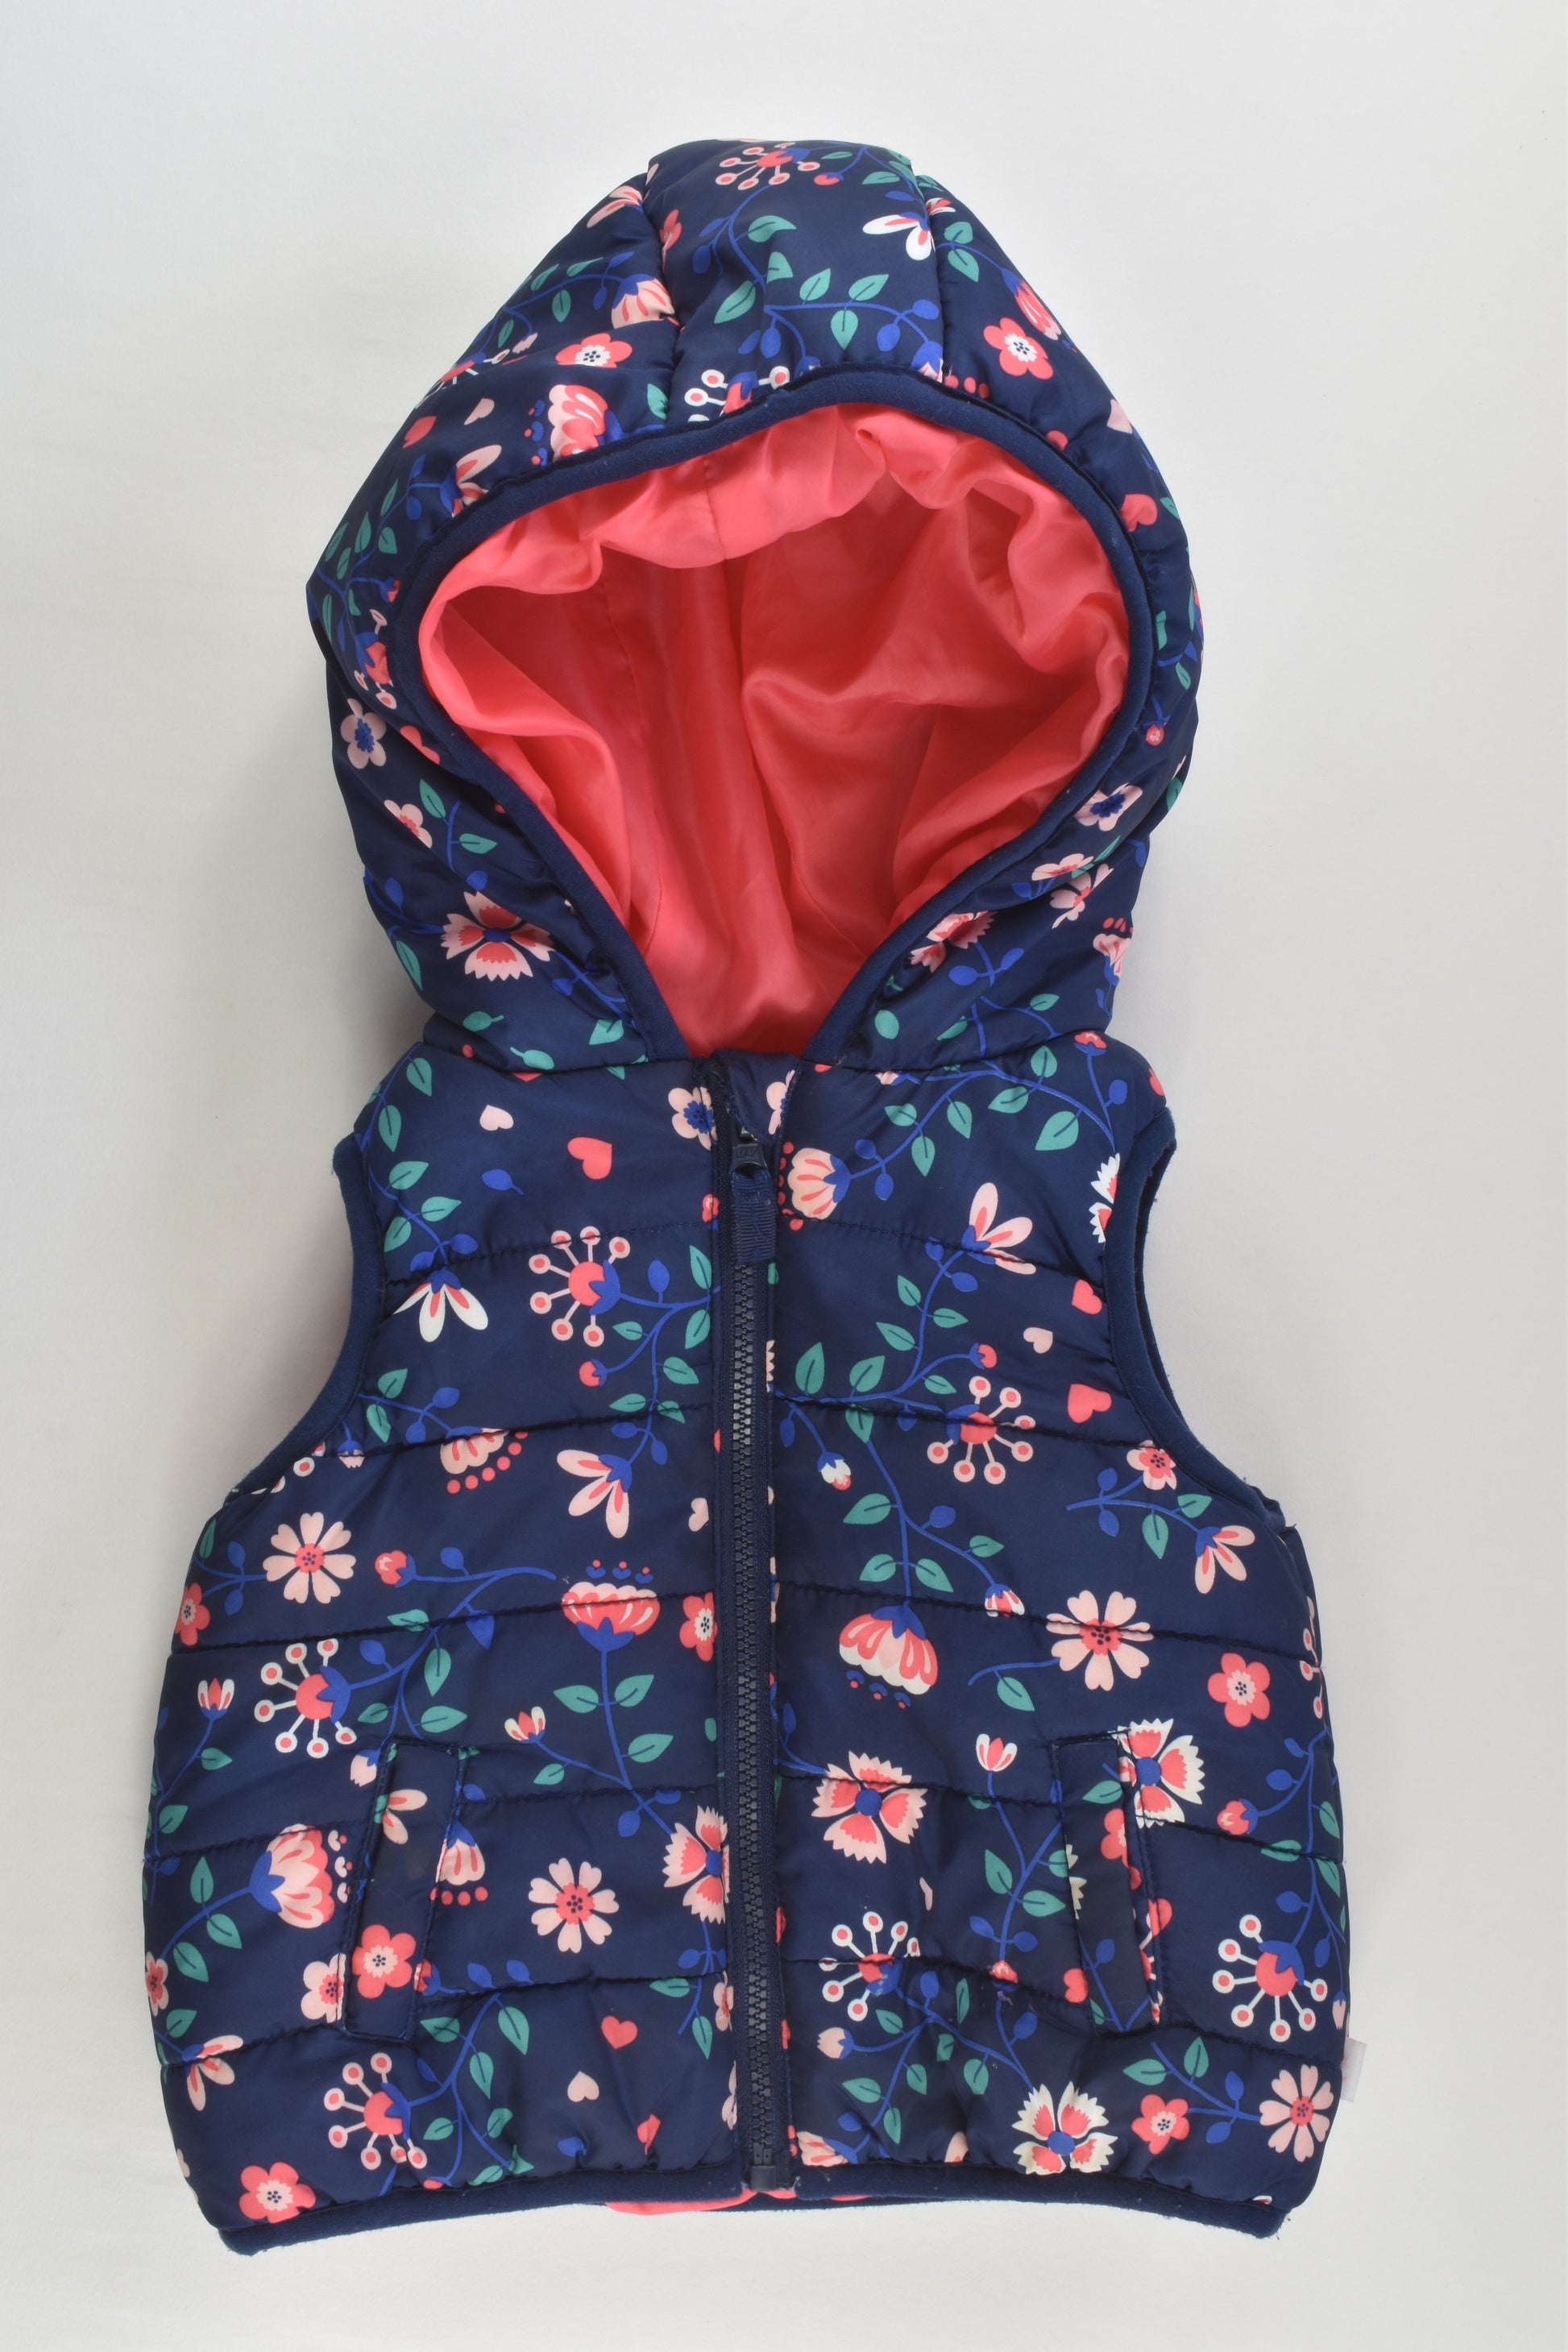 Target Size 0 (6-12 months) Floral Hooded Puffer Vest